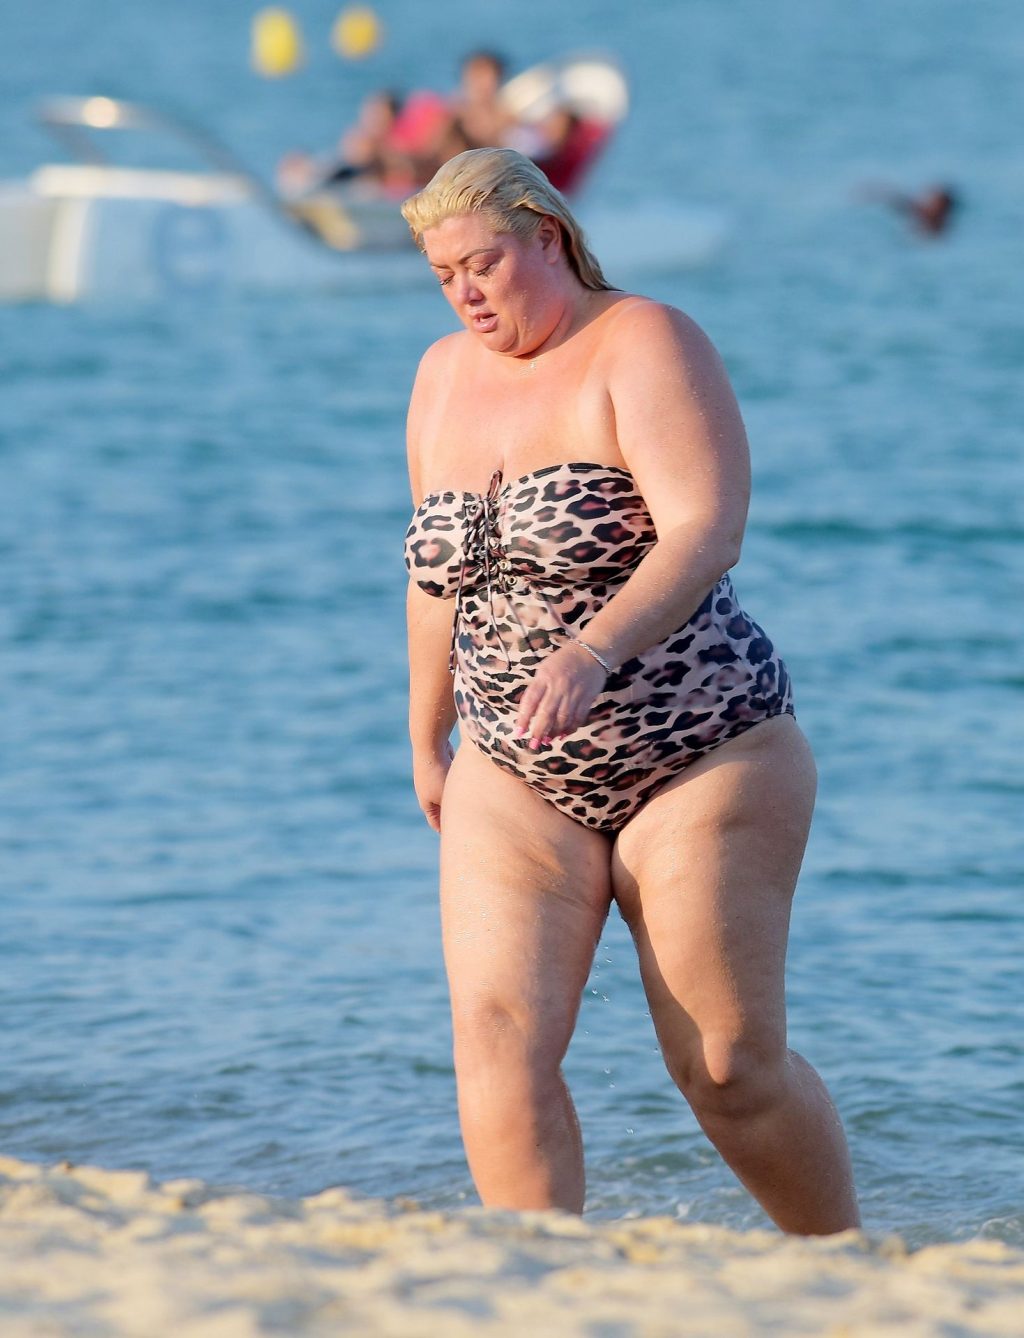 Gemma Collins in bikini enjoying the sun in Saint Tropez